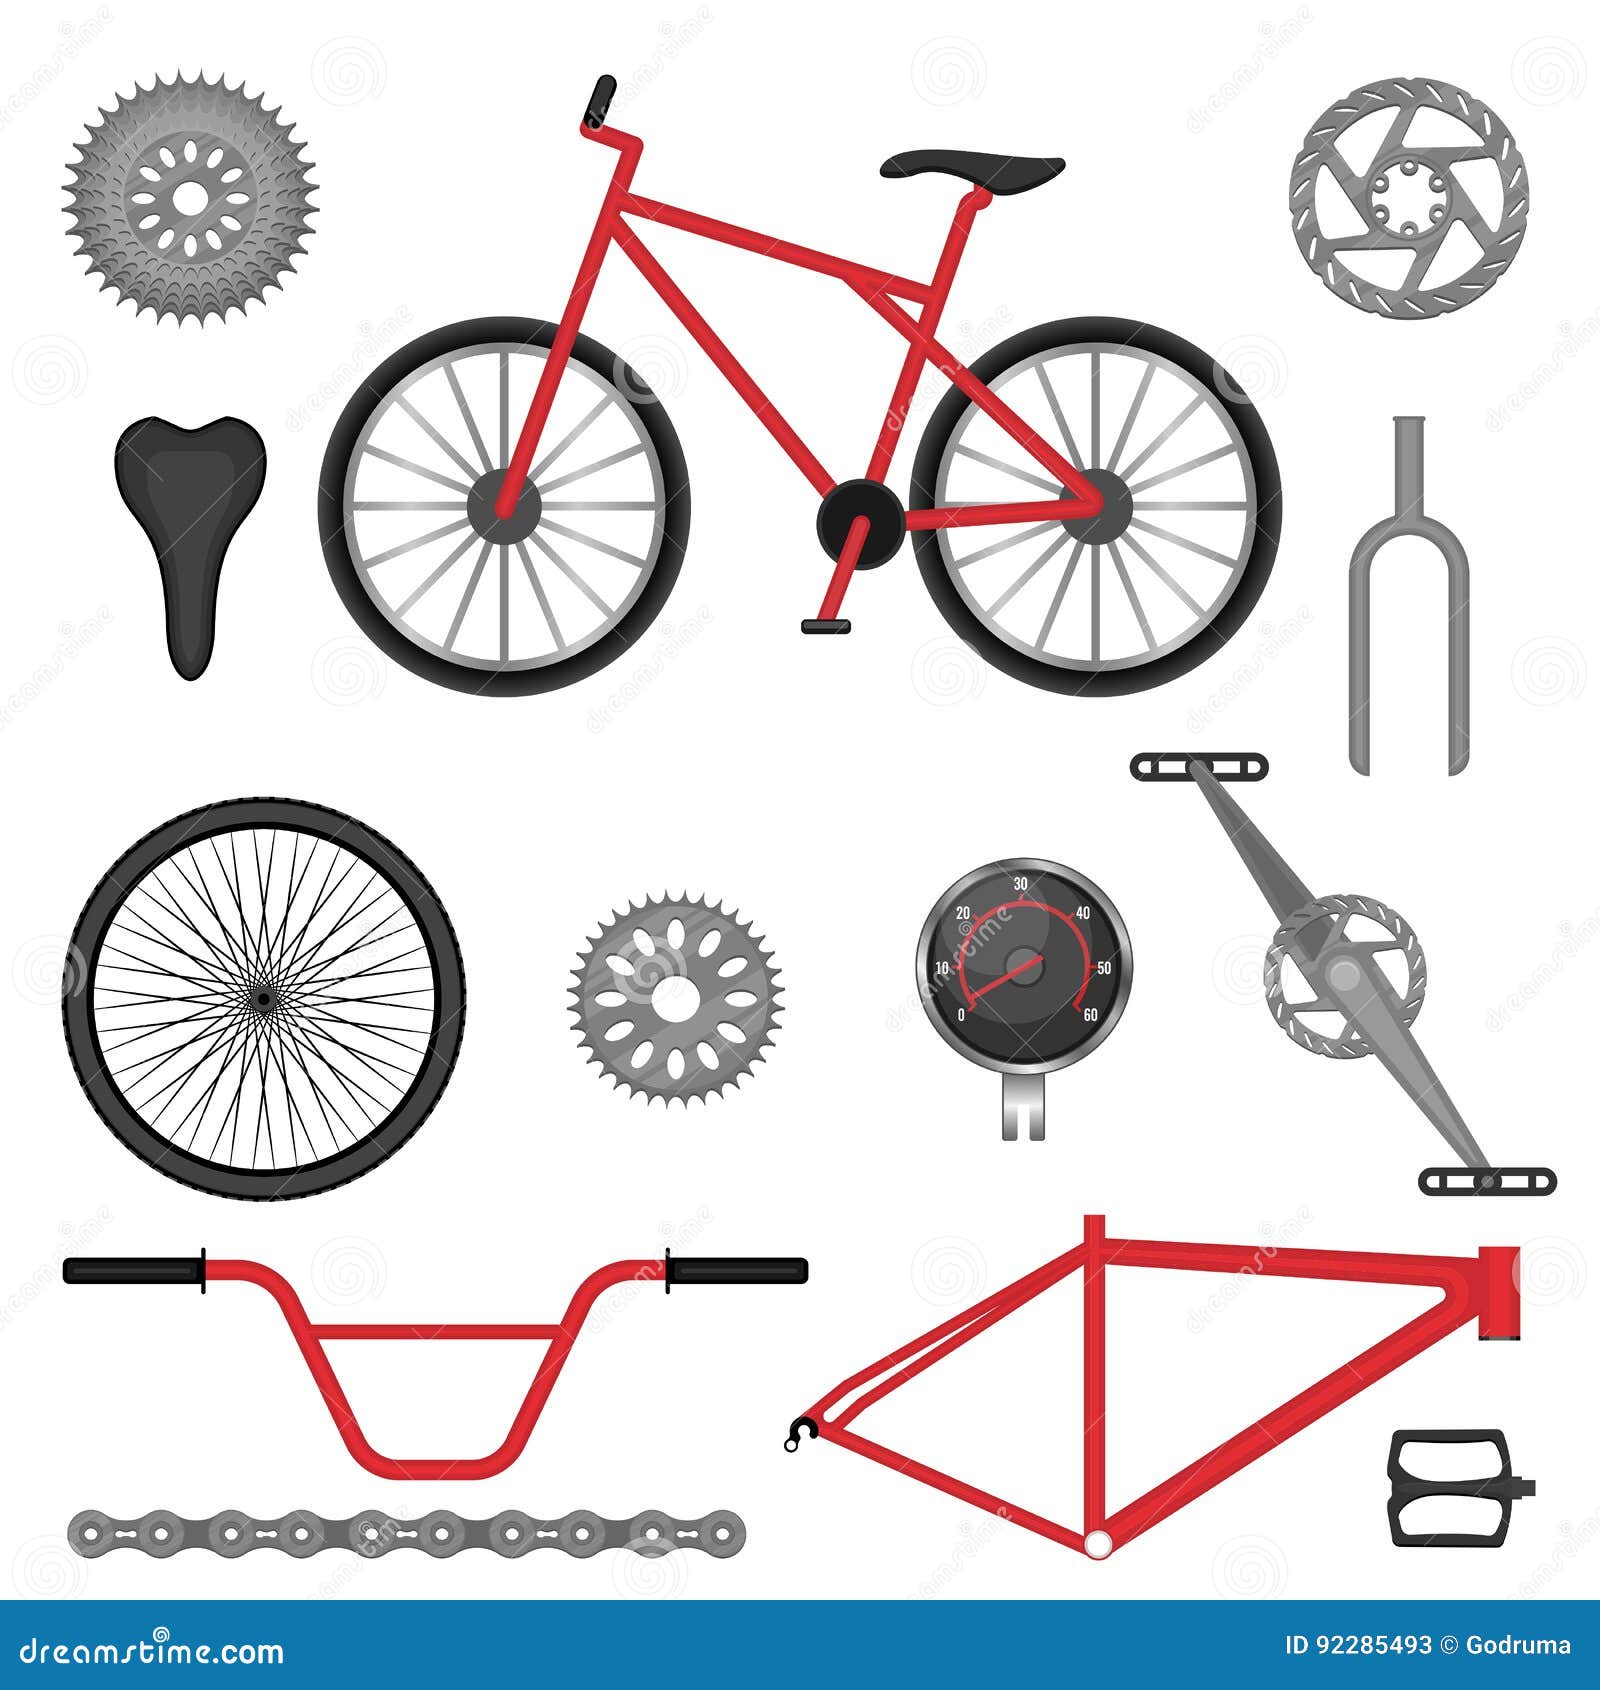 Bike Parts Stock – 39 Bike Parts Stock Illustrations, Vectors & Clipart - Dreamstime